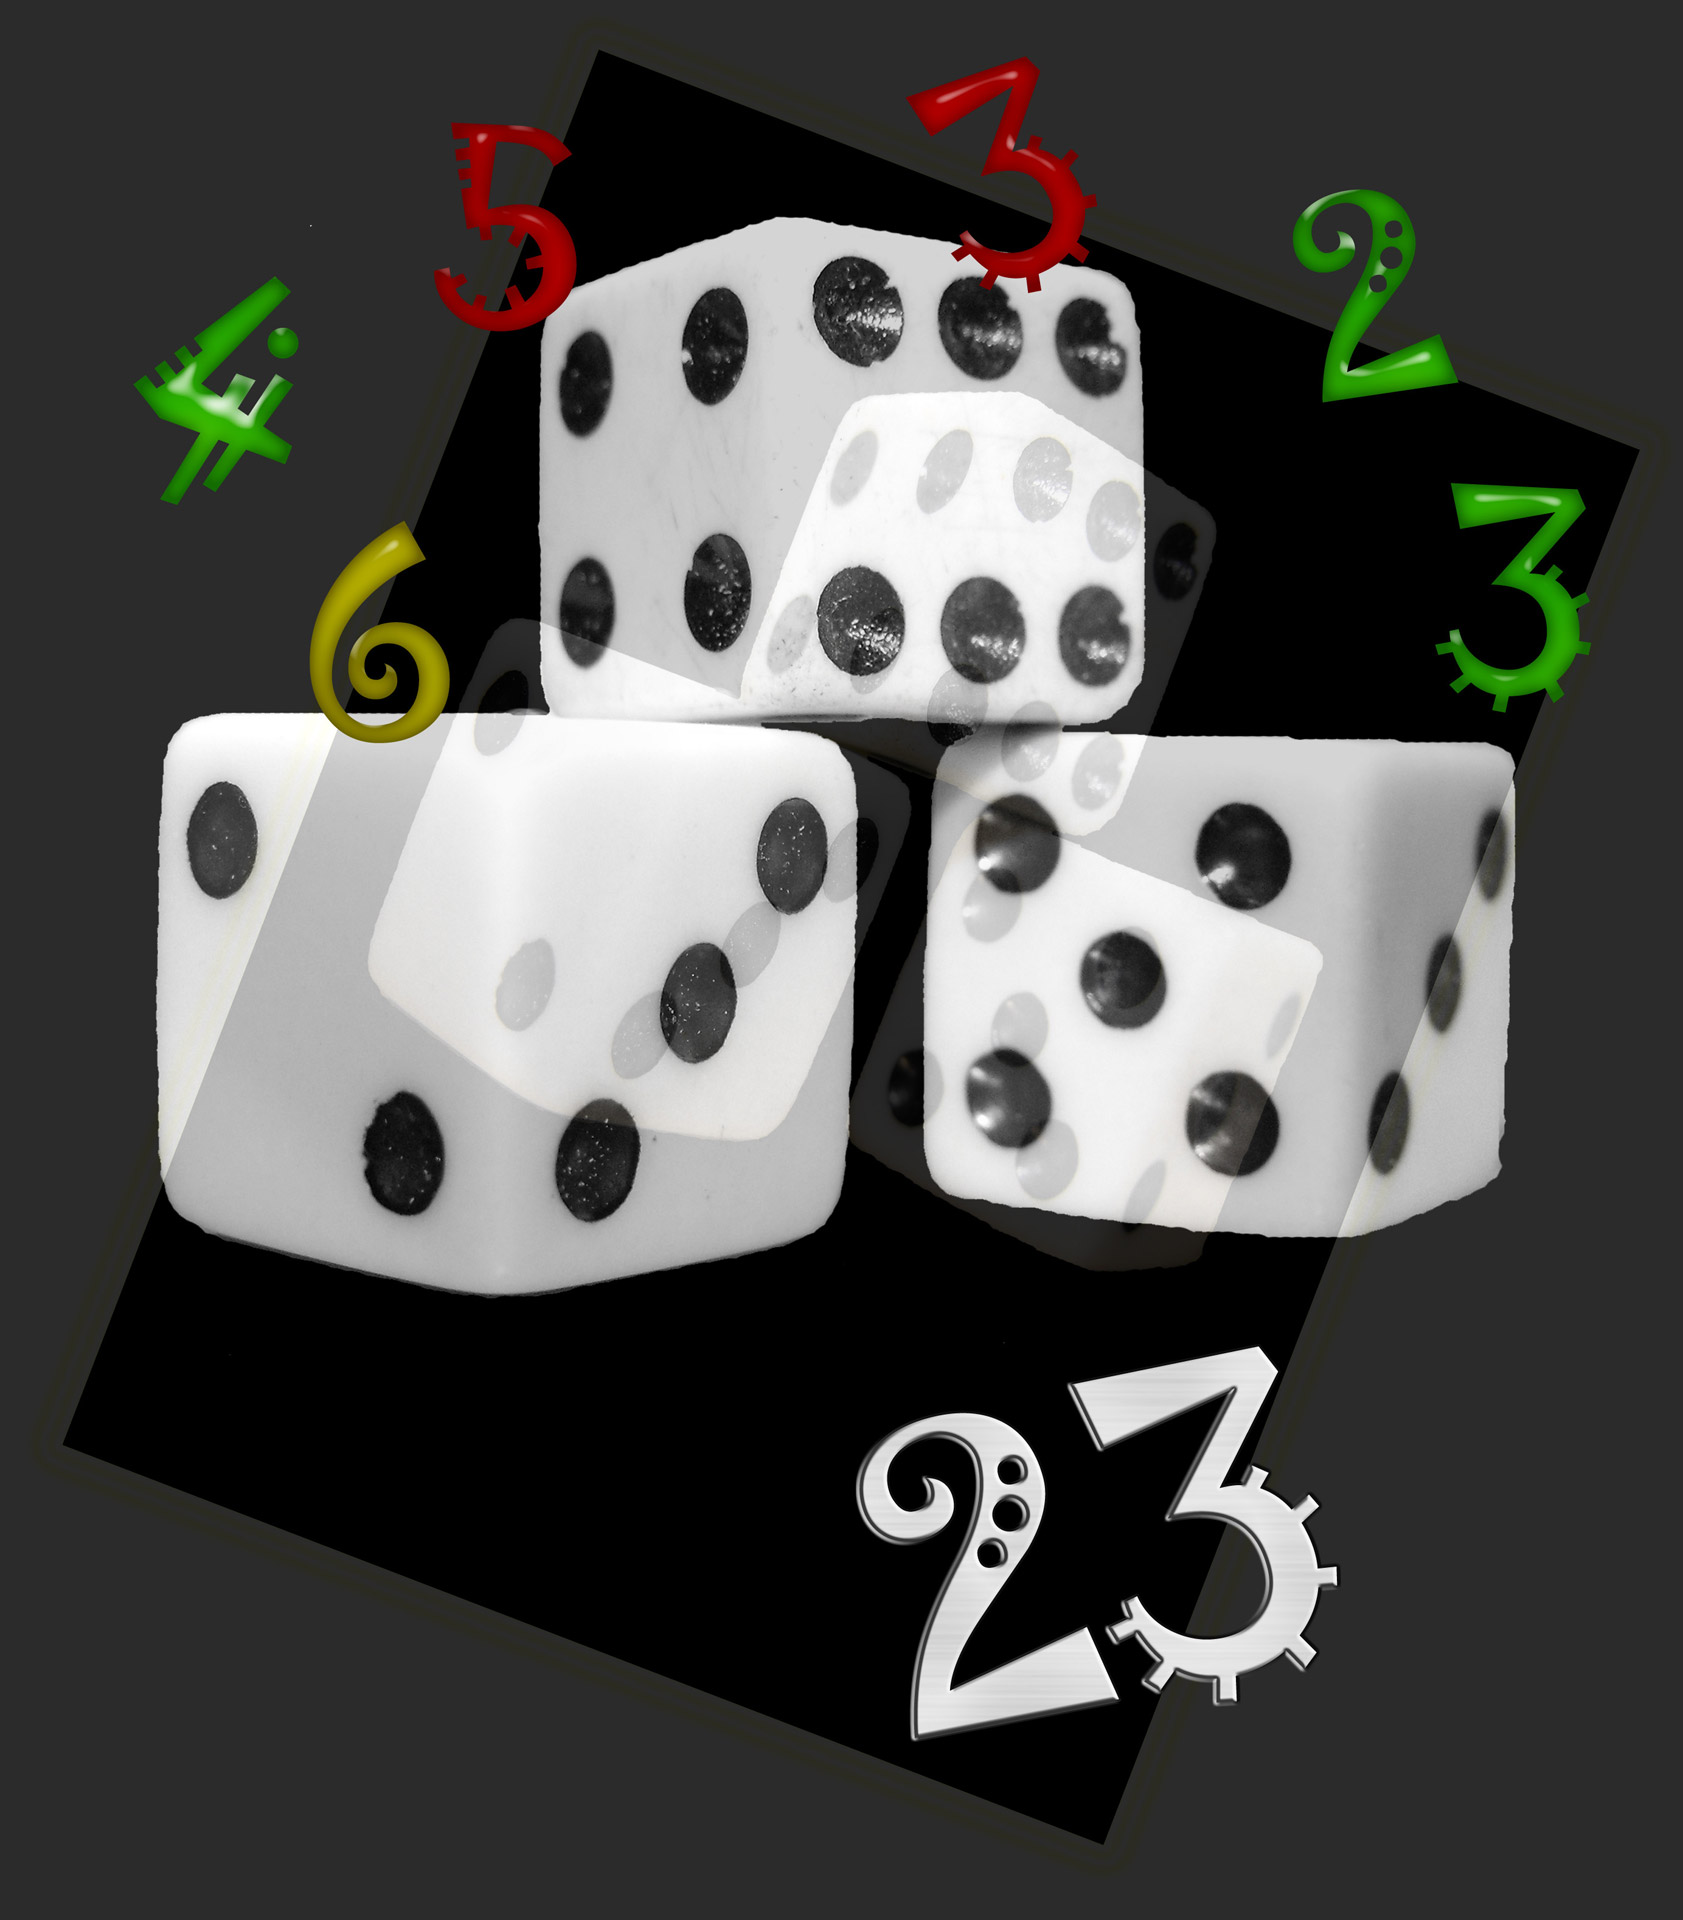 Three dice adding up to 23